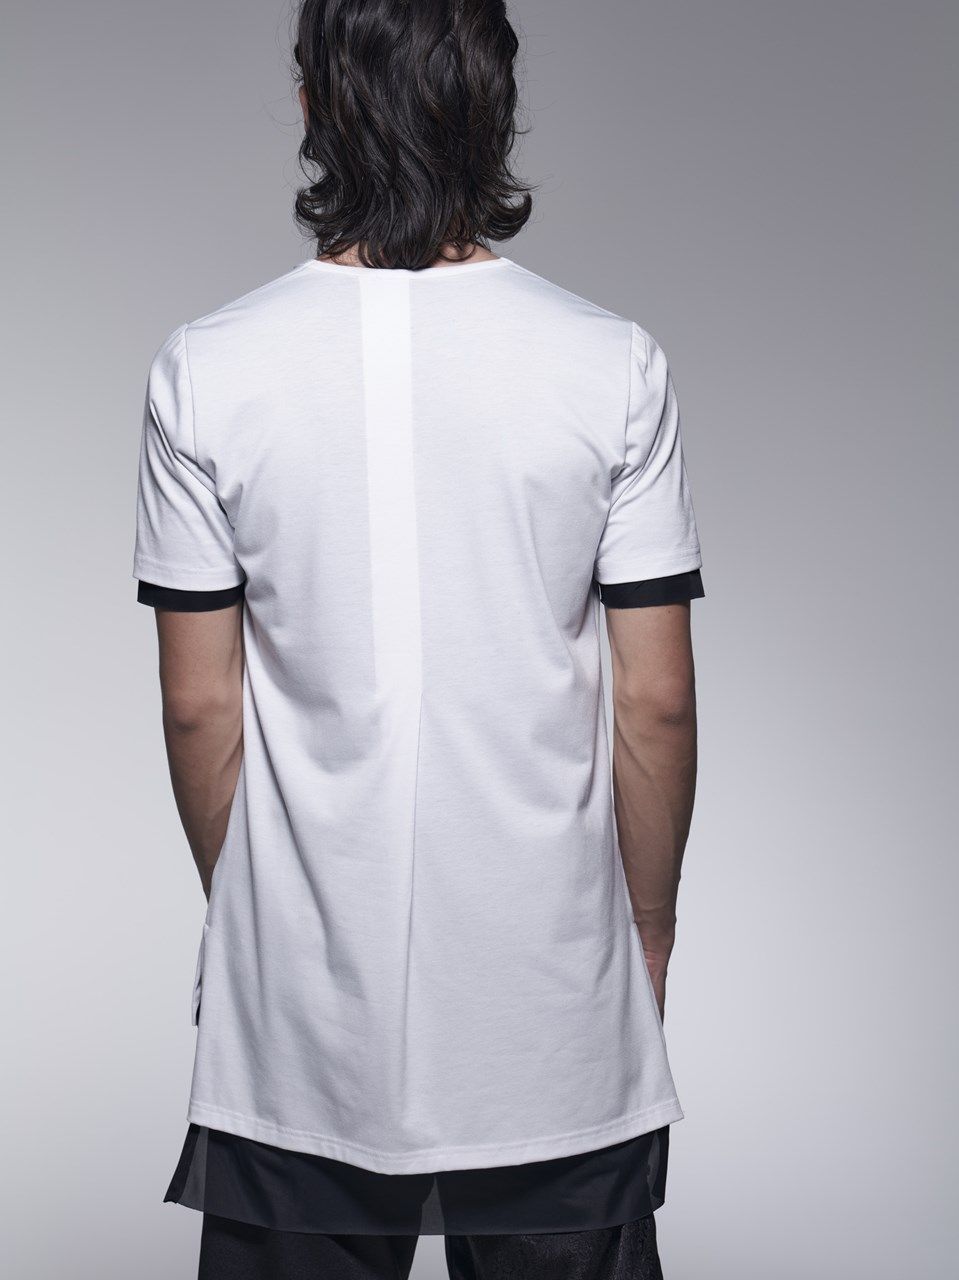 kiryuyrik - LayeredT-Shirt / レイヤードプリントTシャツ / ホワイト